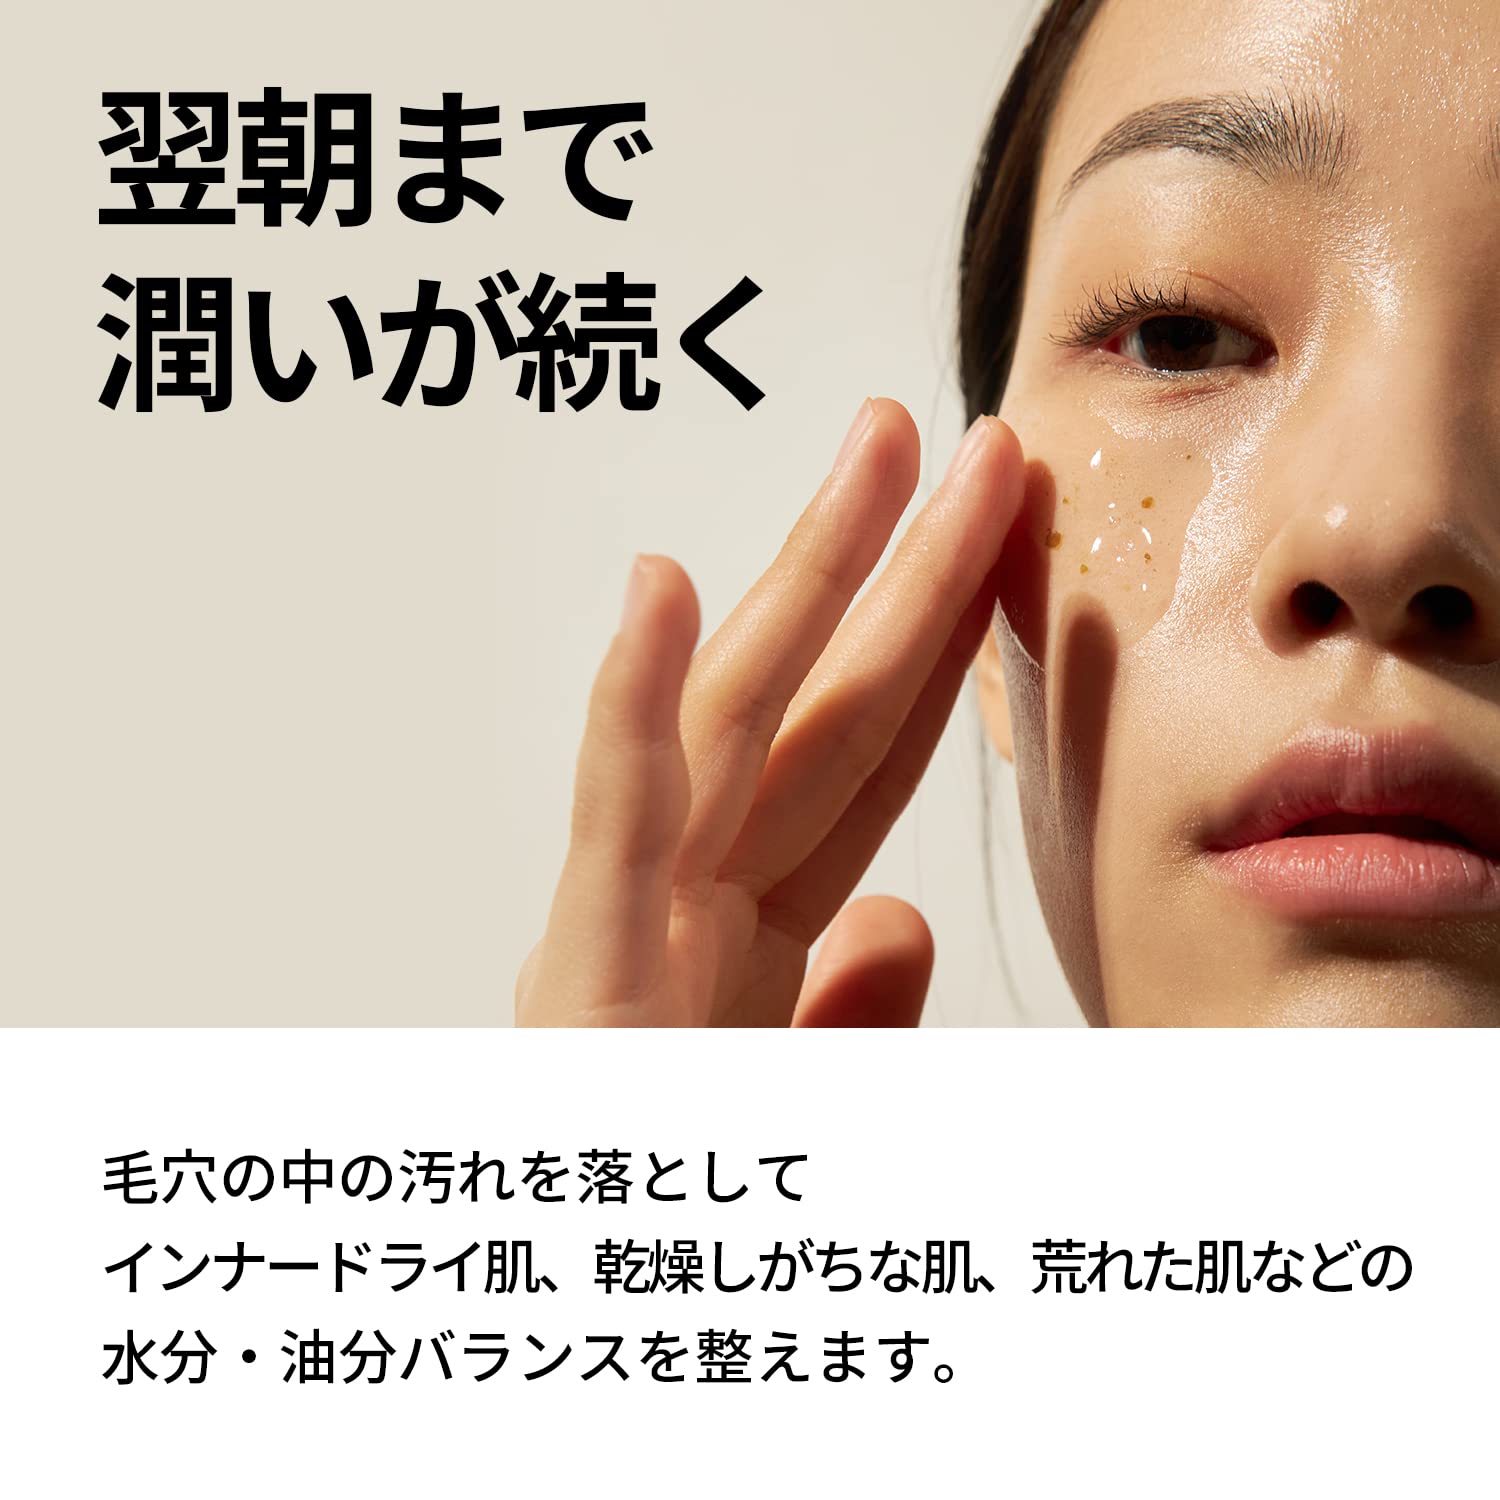 Canmake Light Ocher Marshmallow Finish Face Powder 10g - Matte Pink Package - YOYO JAPAN